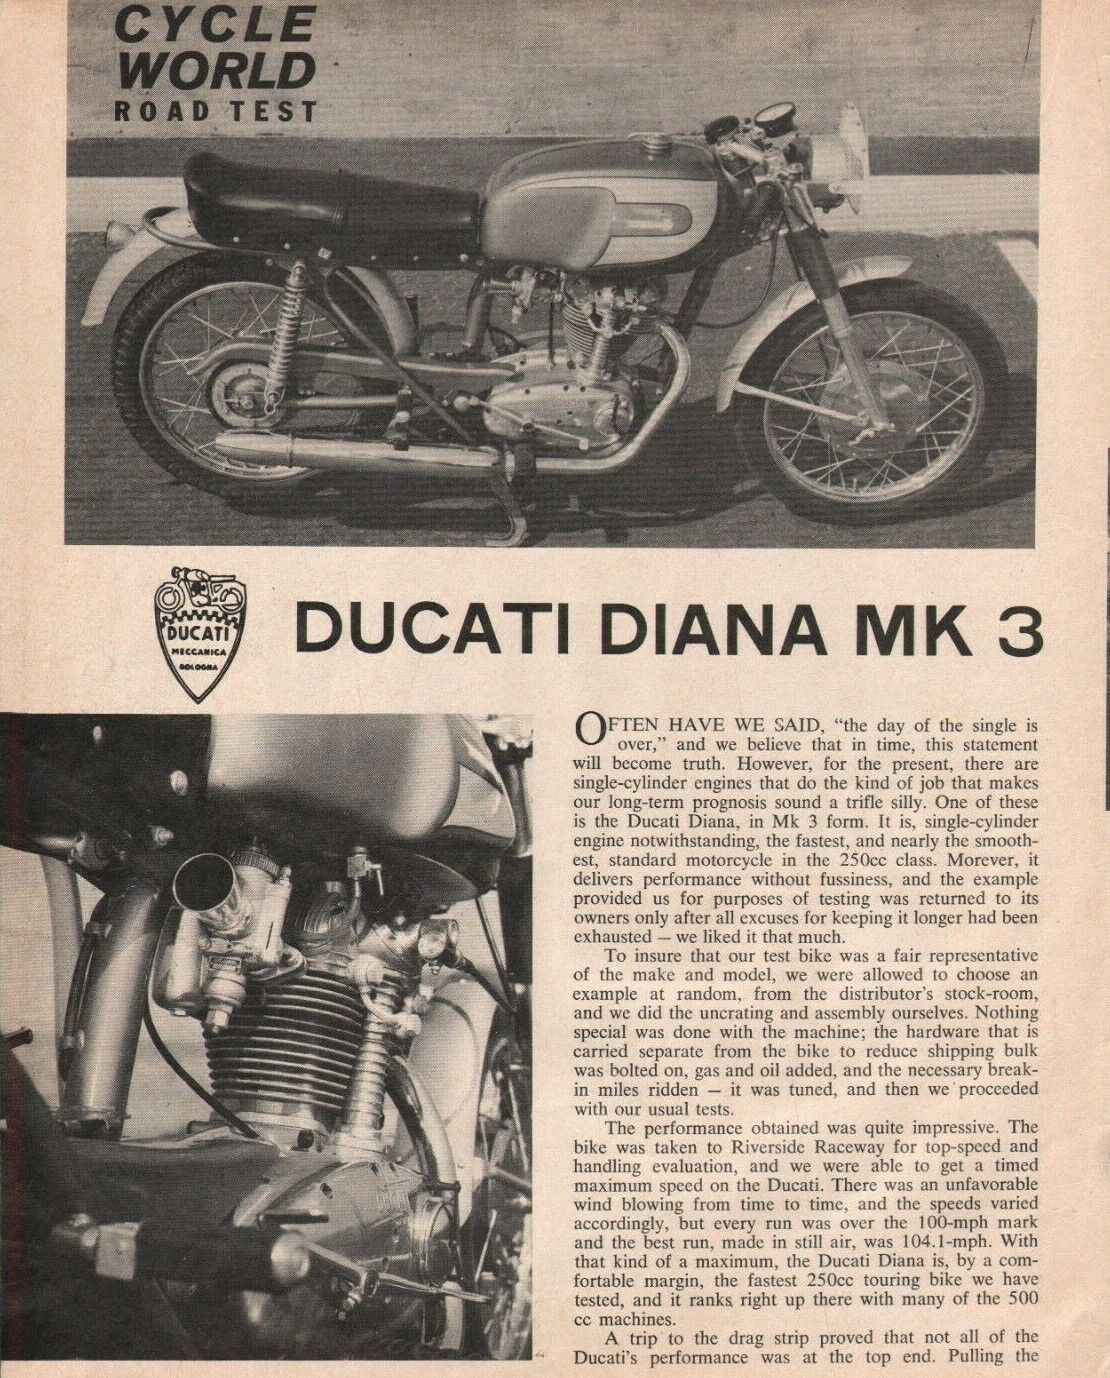 1963 Ducati Diana Mk 3 - 4-Page Vintage Motorcycle Road Test Article